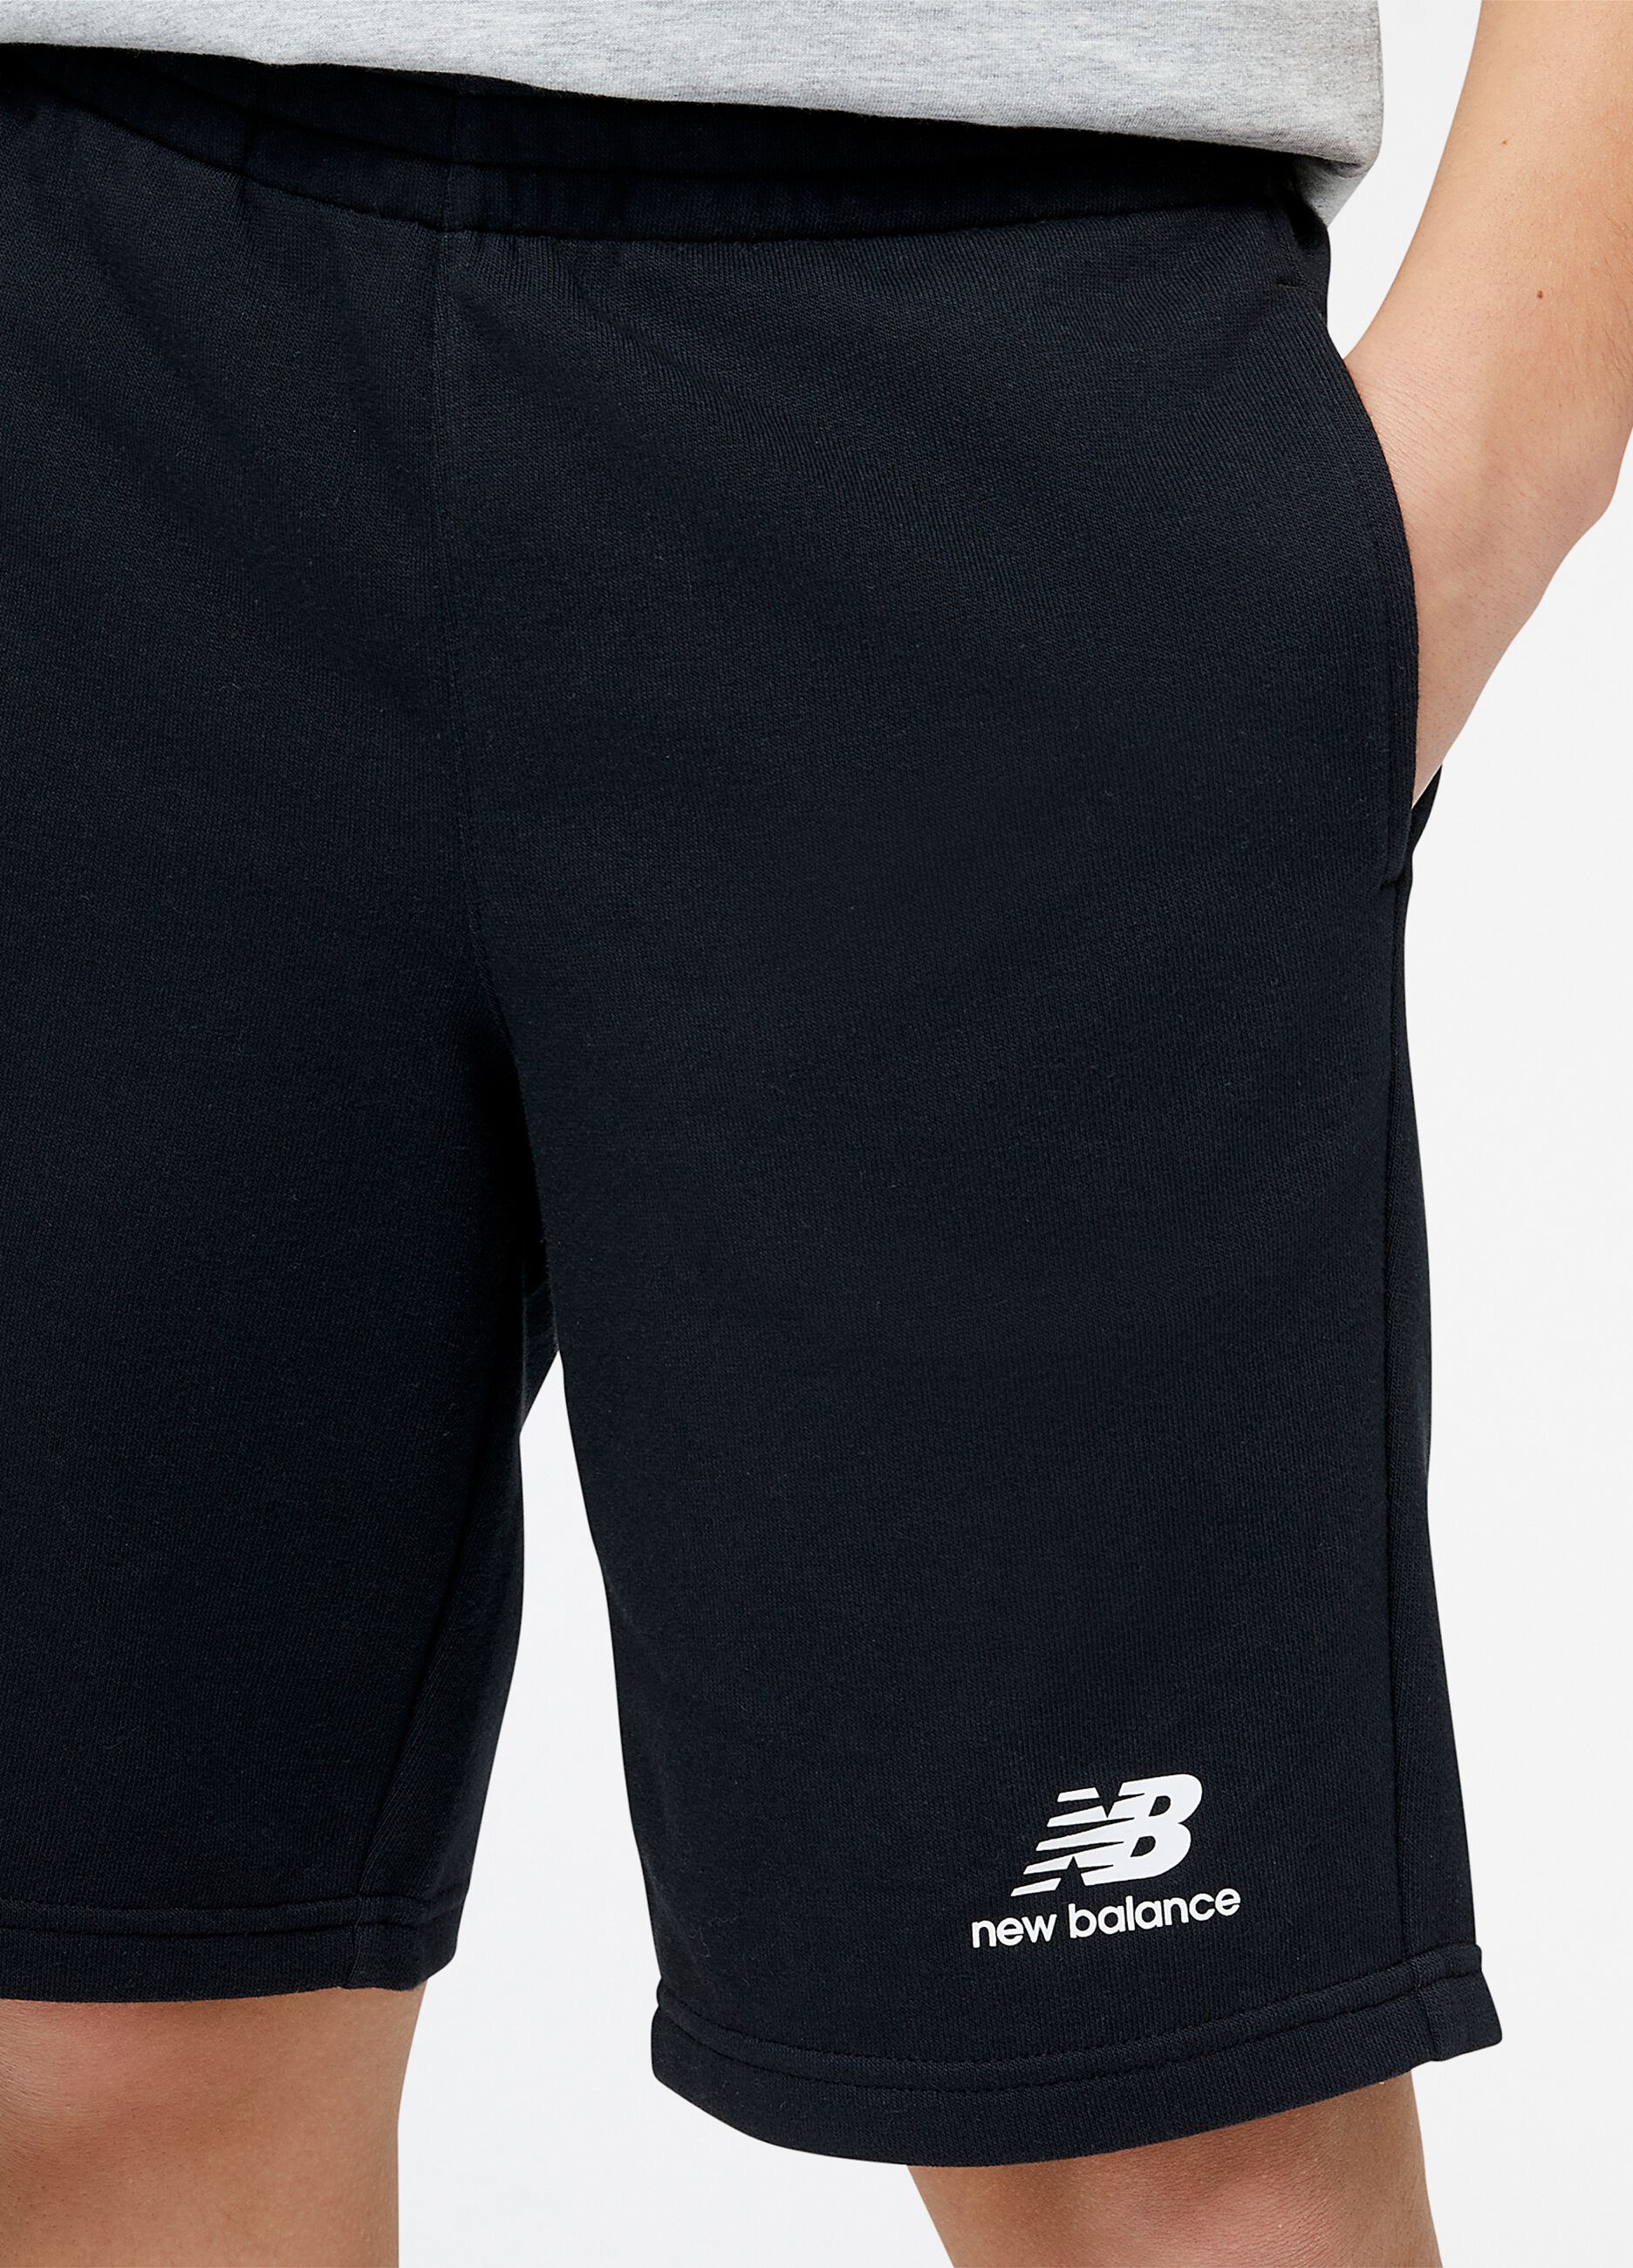 Shorts with Essentials logo